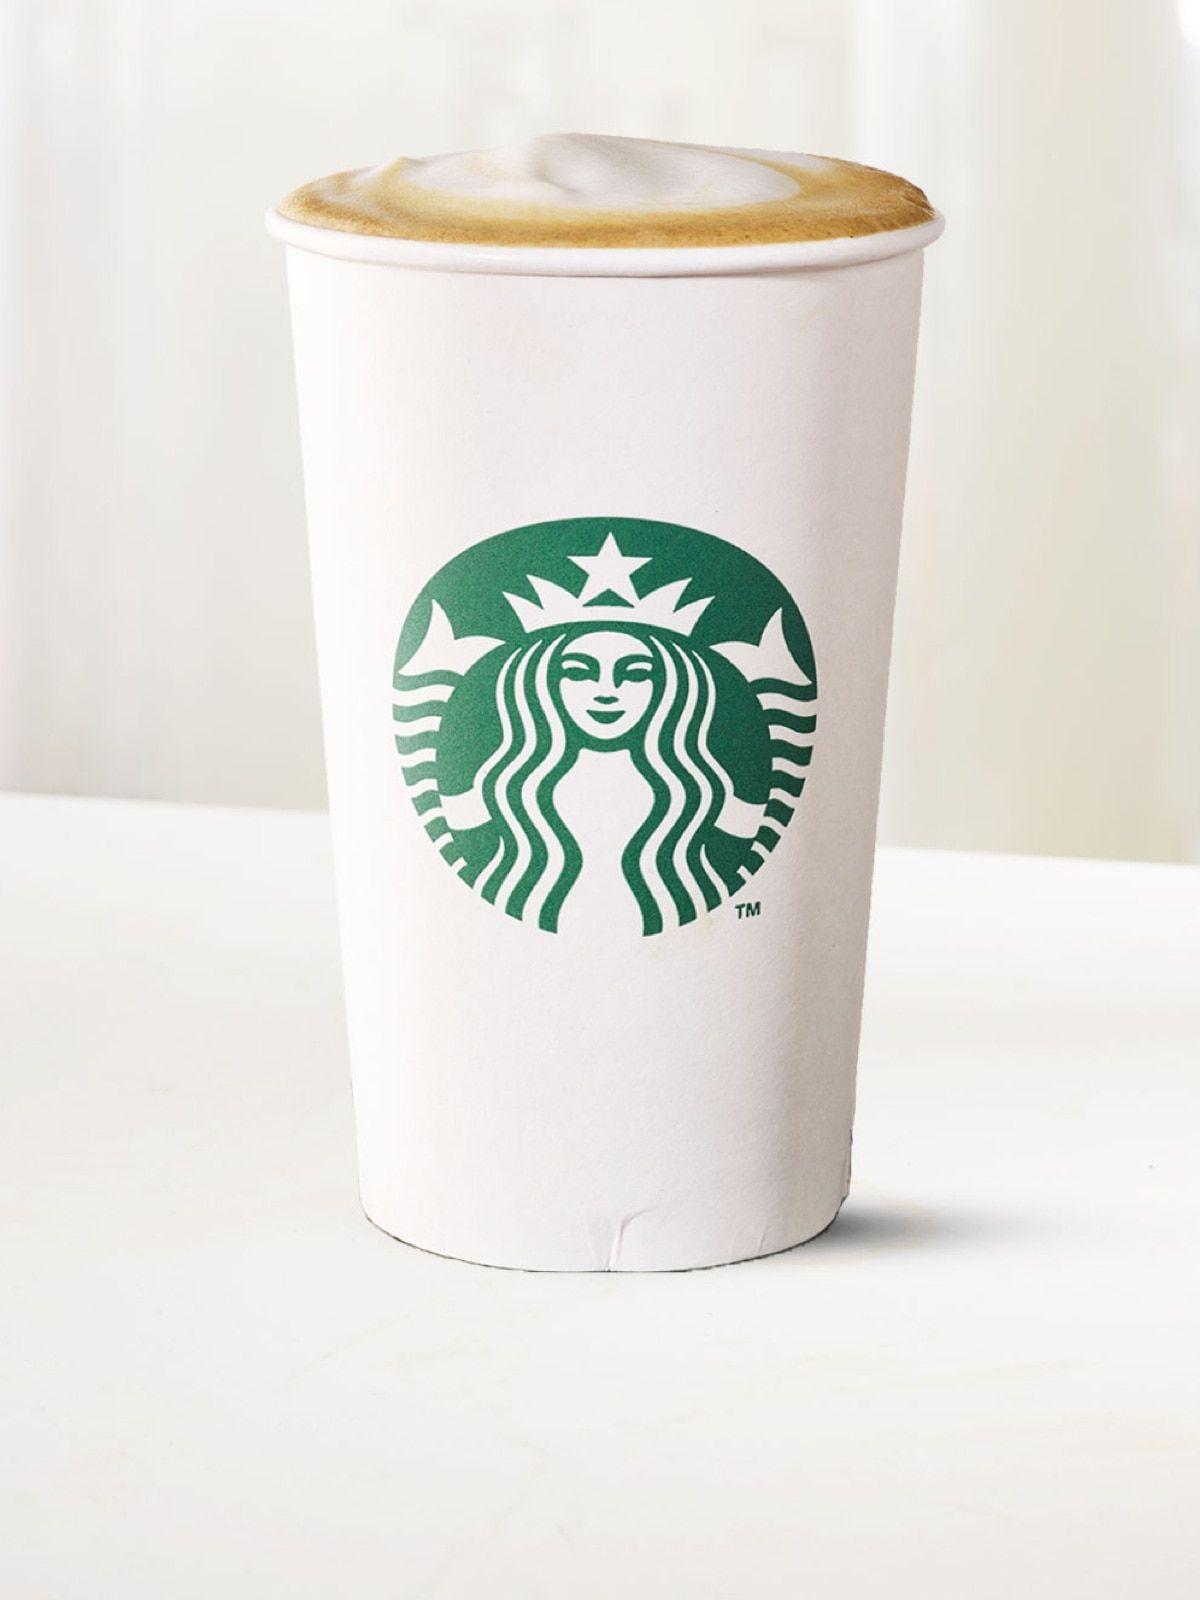 Official Starbucks Logo - Starbucks Careers: Starbucks Coffee Company